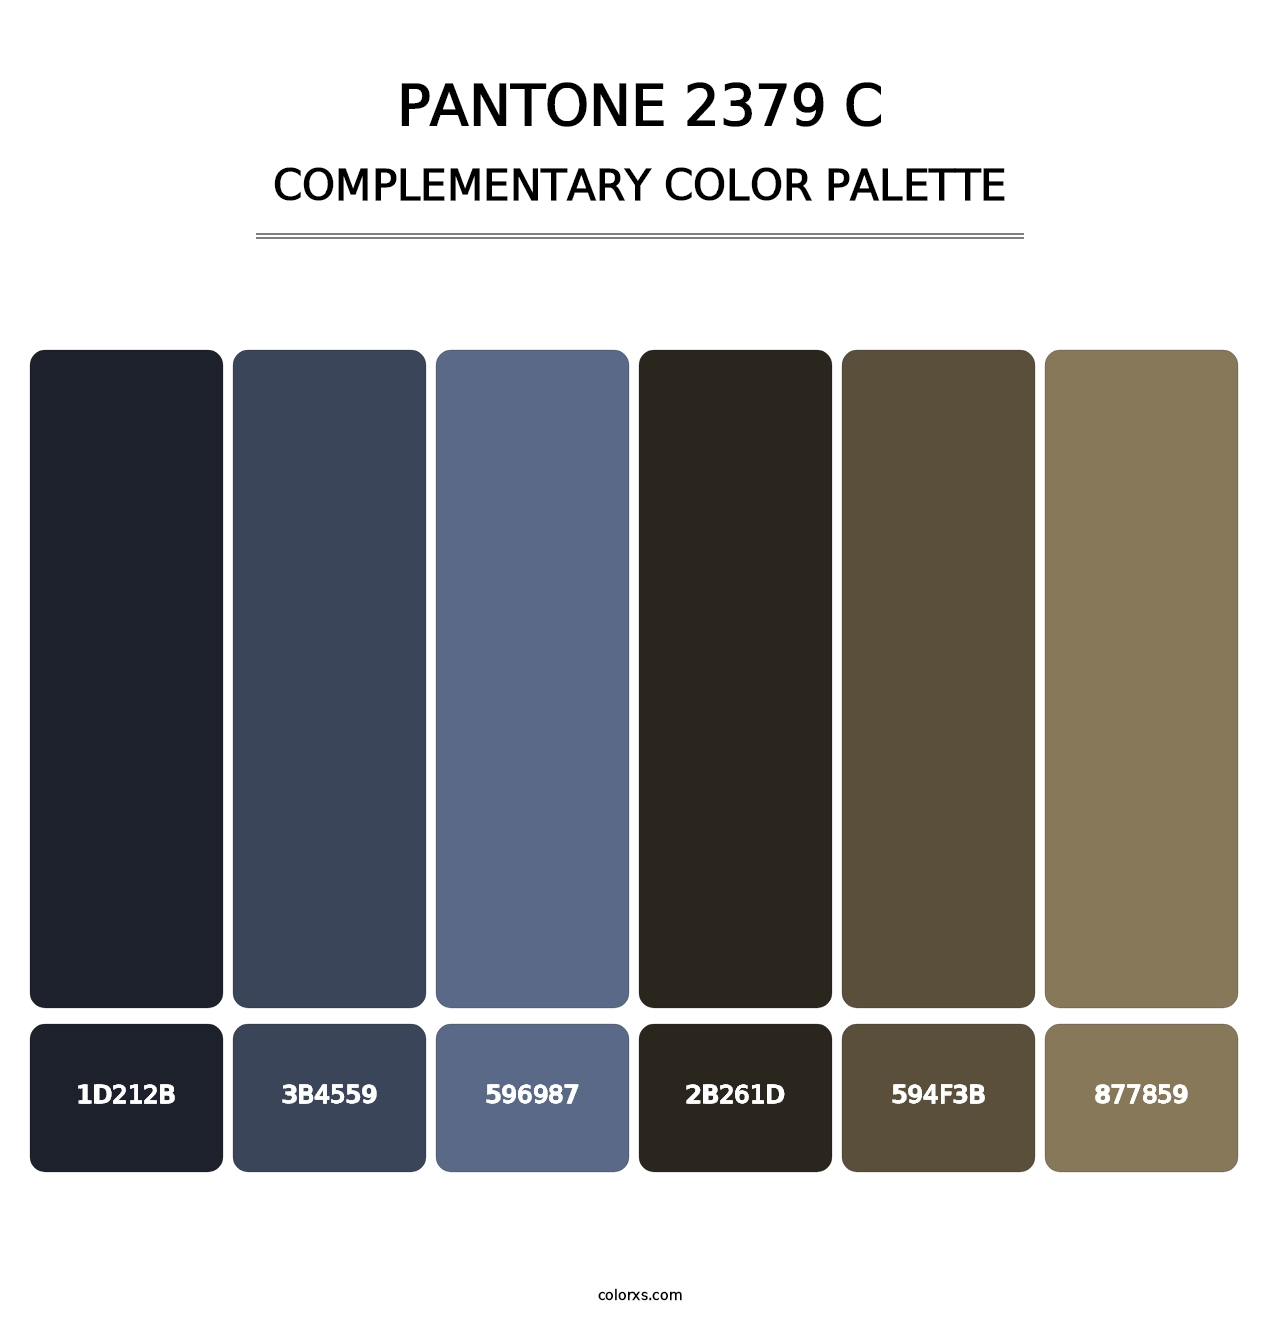 PANTONE 2379 C - Complementary Color Palette